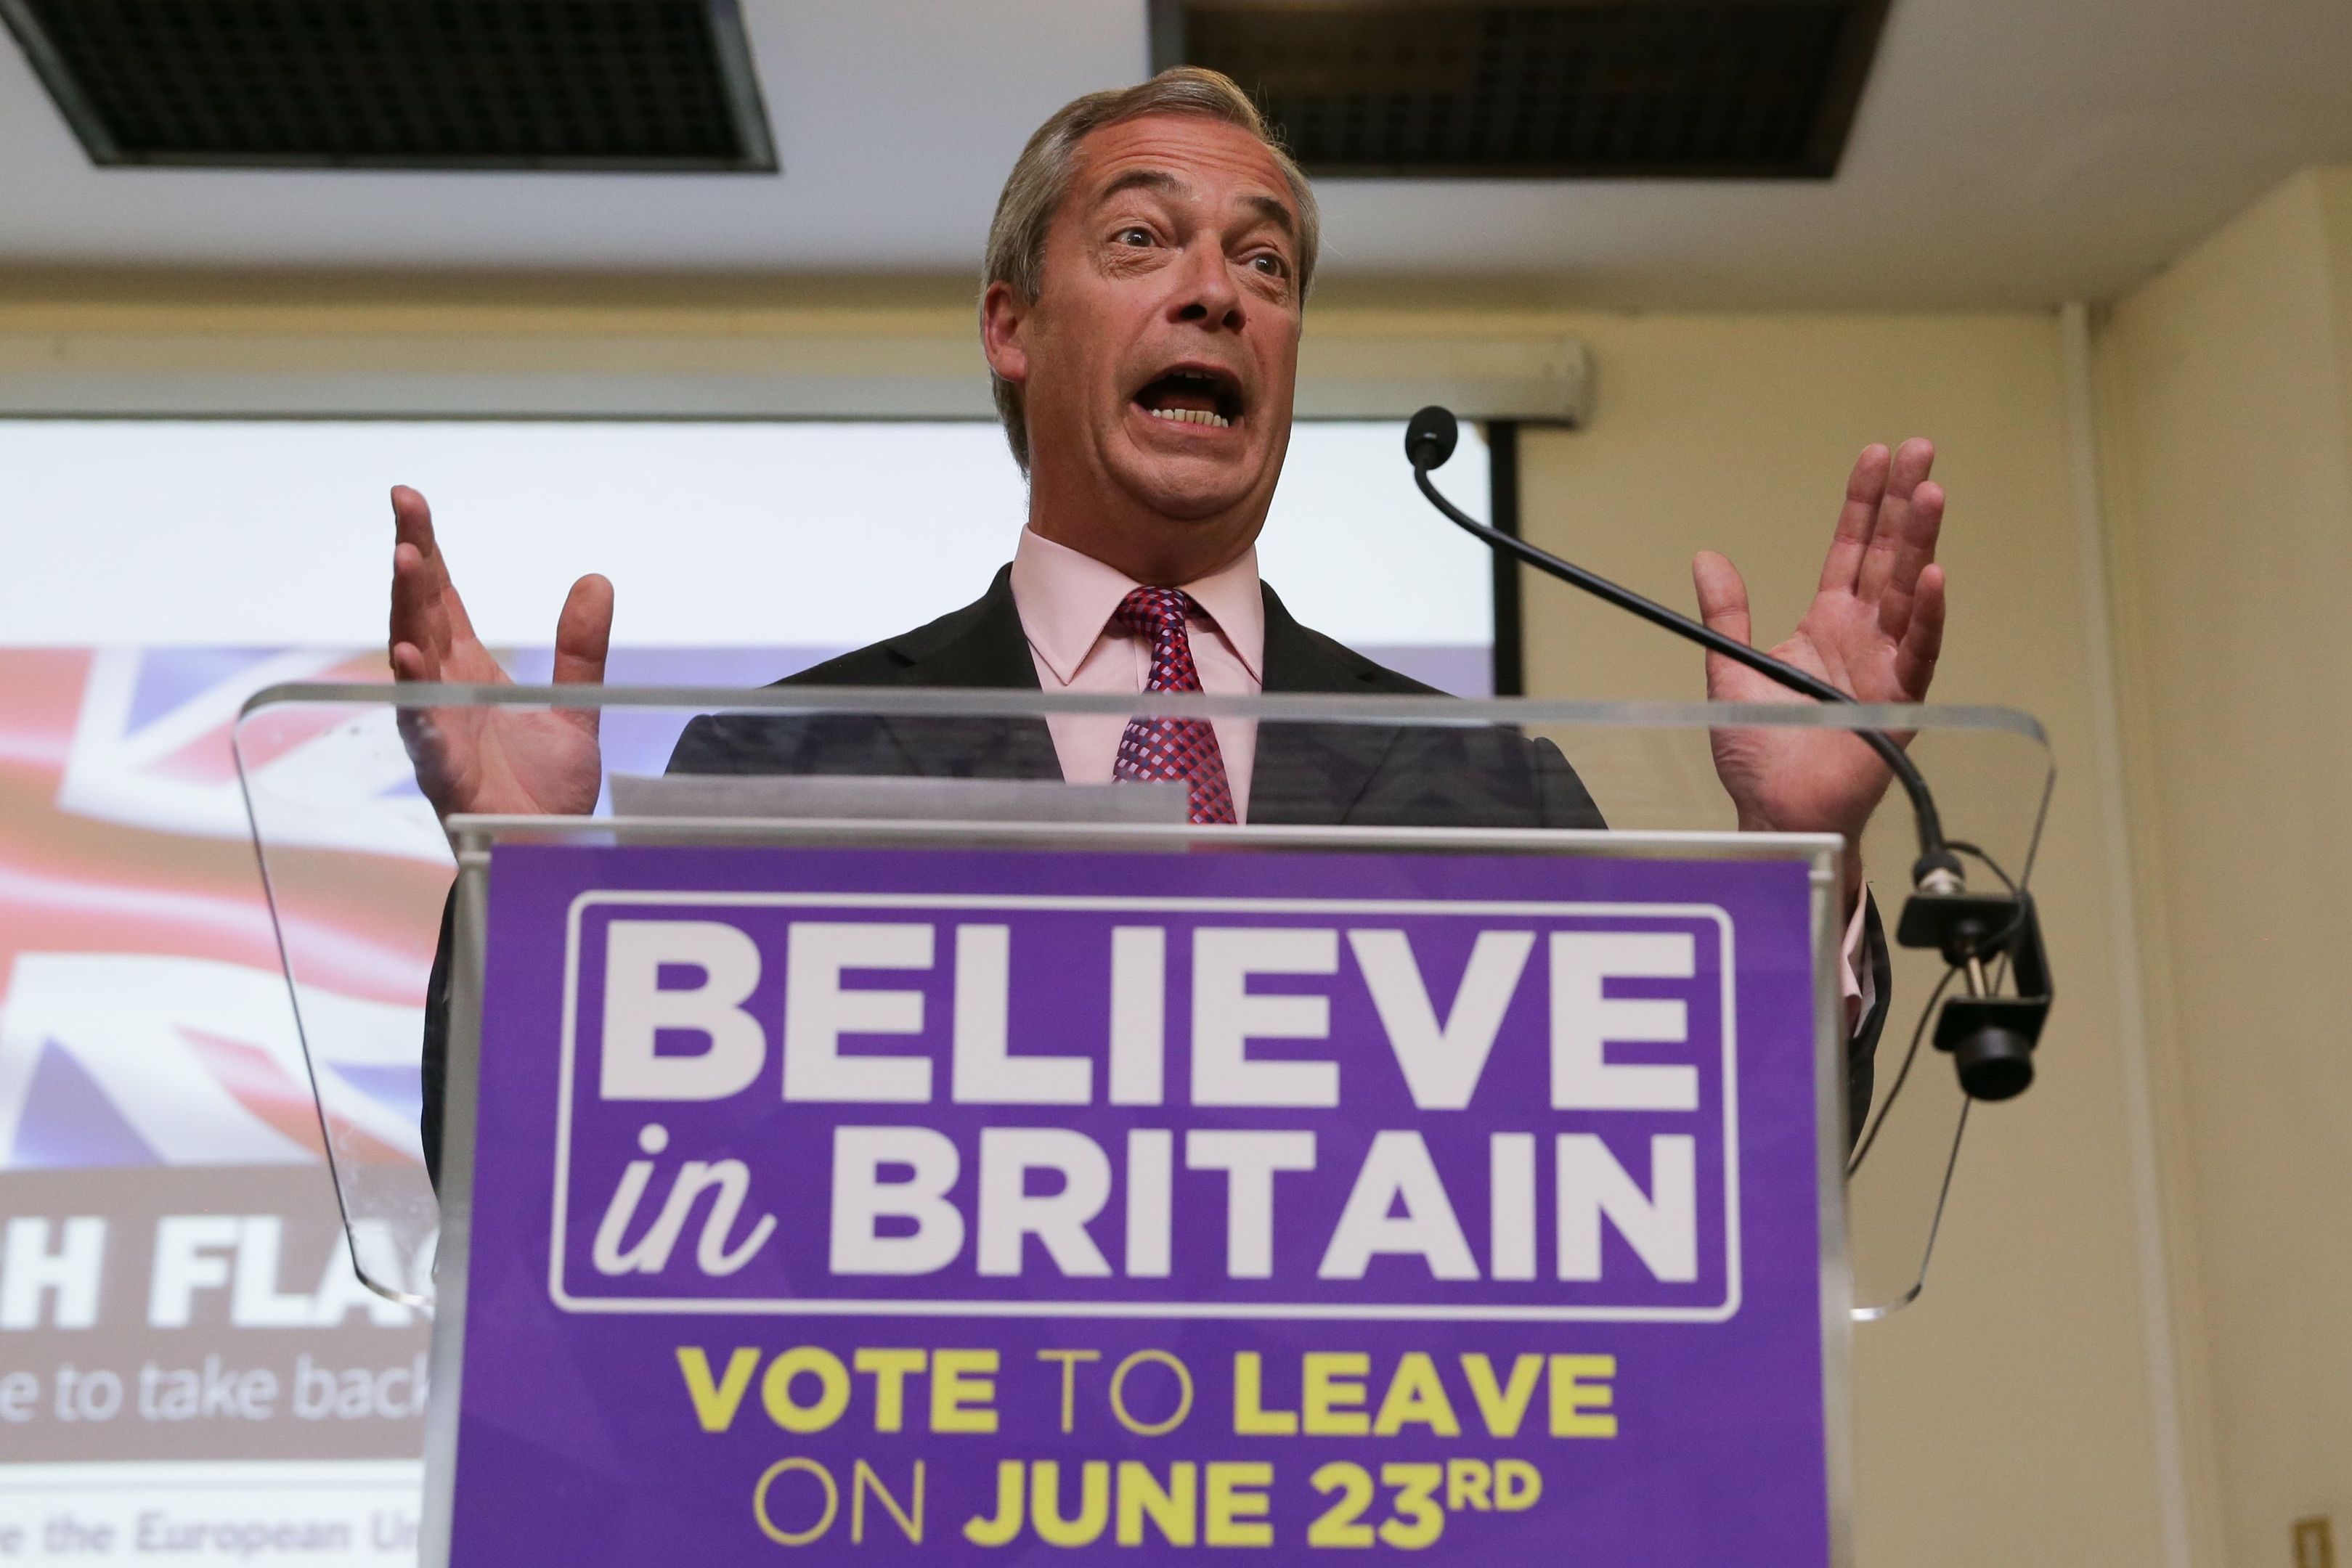 Ukip leader Nigel Farage delivers his final speech of the EU referendum campaign at the Emmanuel Centre in London.